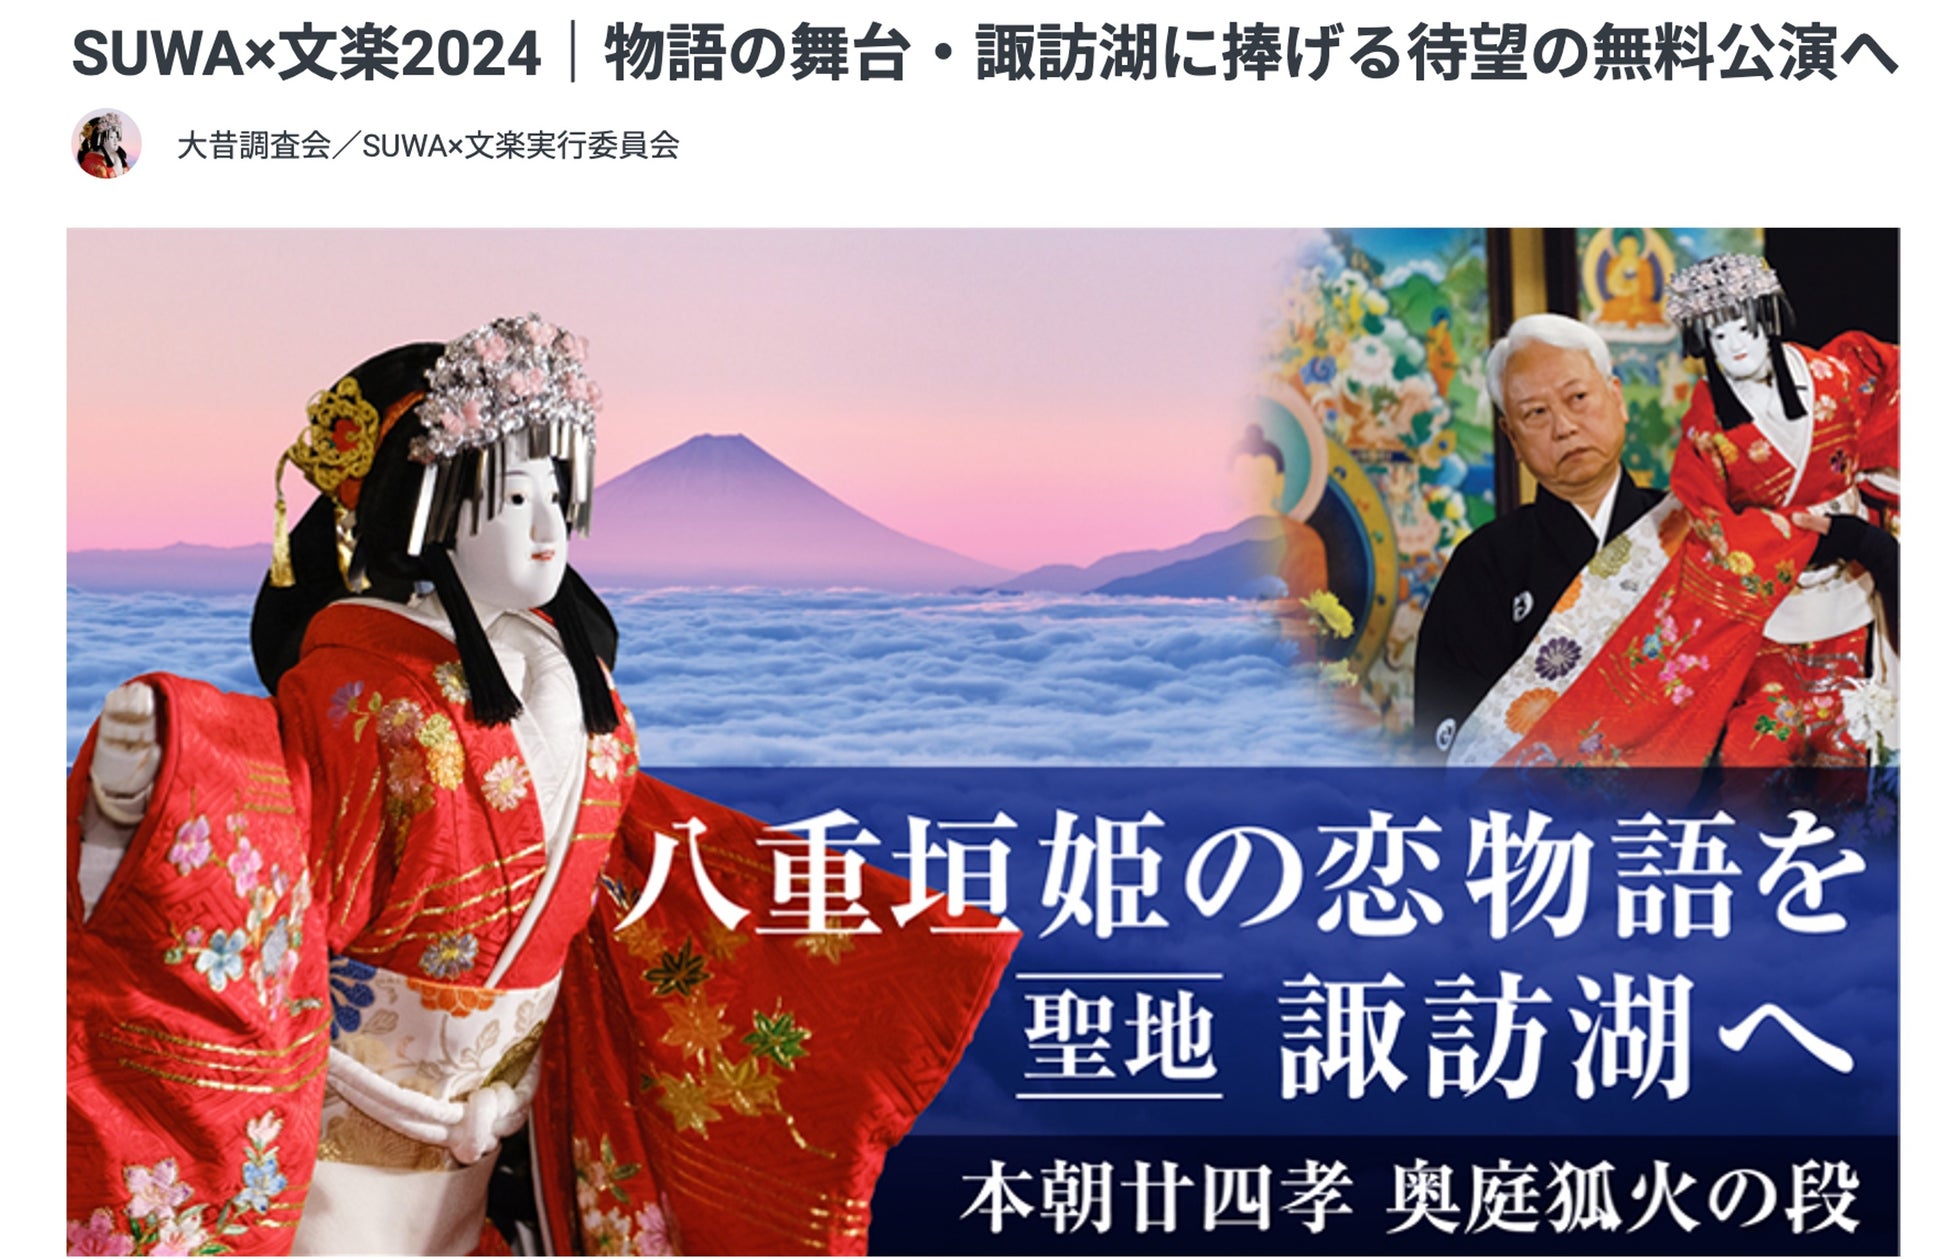 【SUWA×文楽2024】八重垣姫の恋物語を聖地・諏訪湖へ! 諏訪湖畔での「無料公演」「映像化」を目指してクラウドファンディング を開始